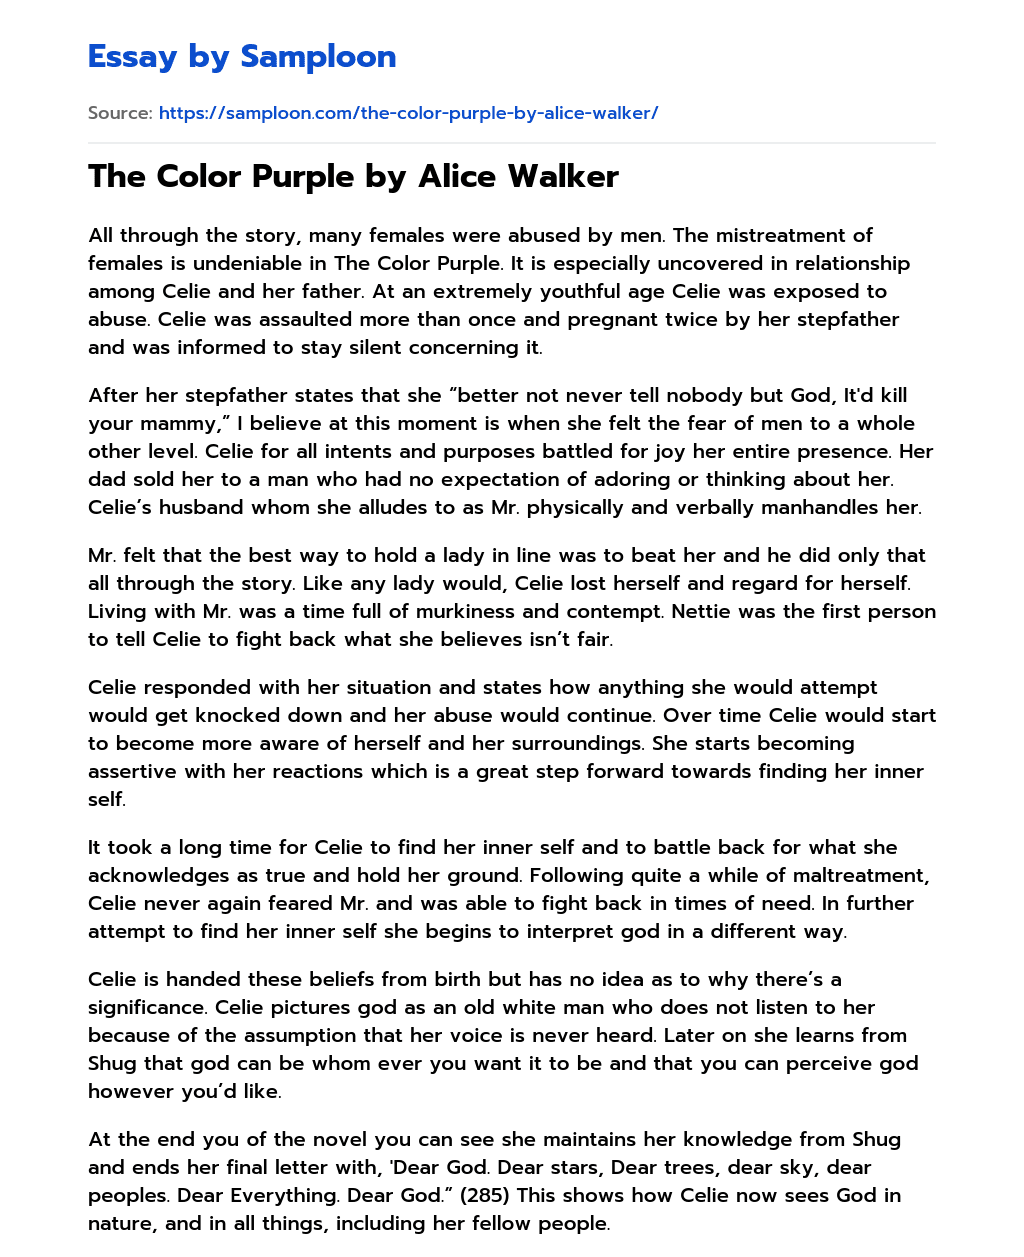 The Color Purple by Alice Walker essay